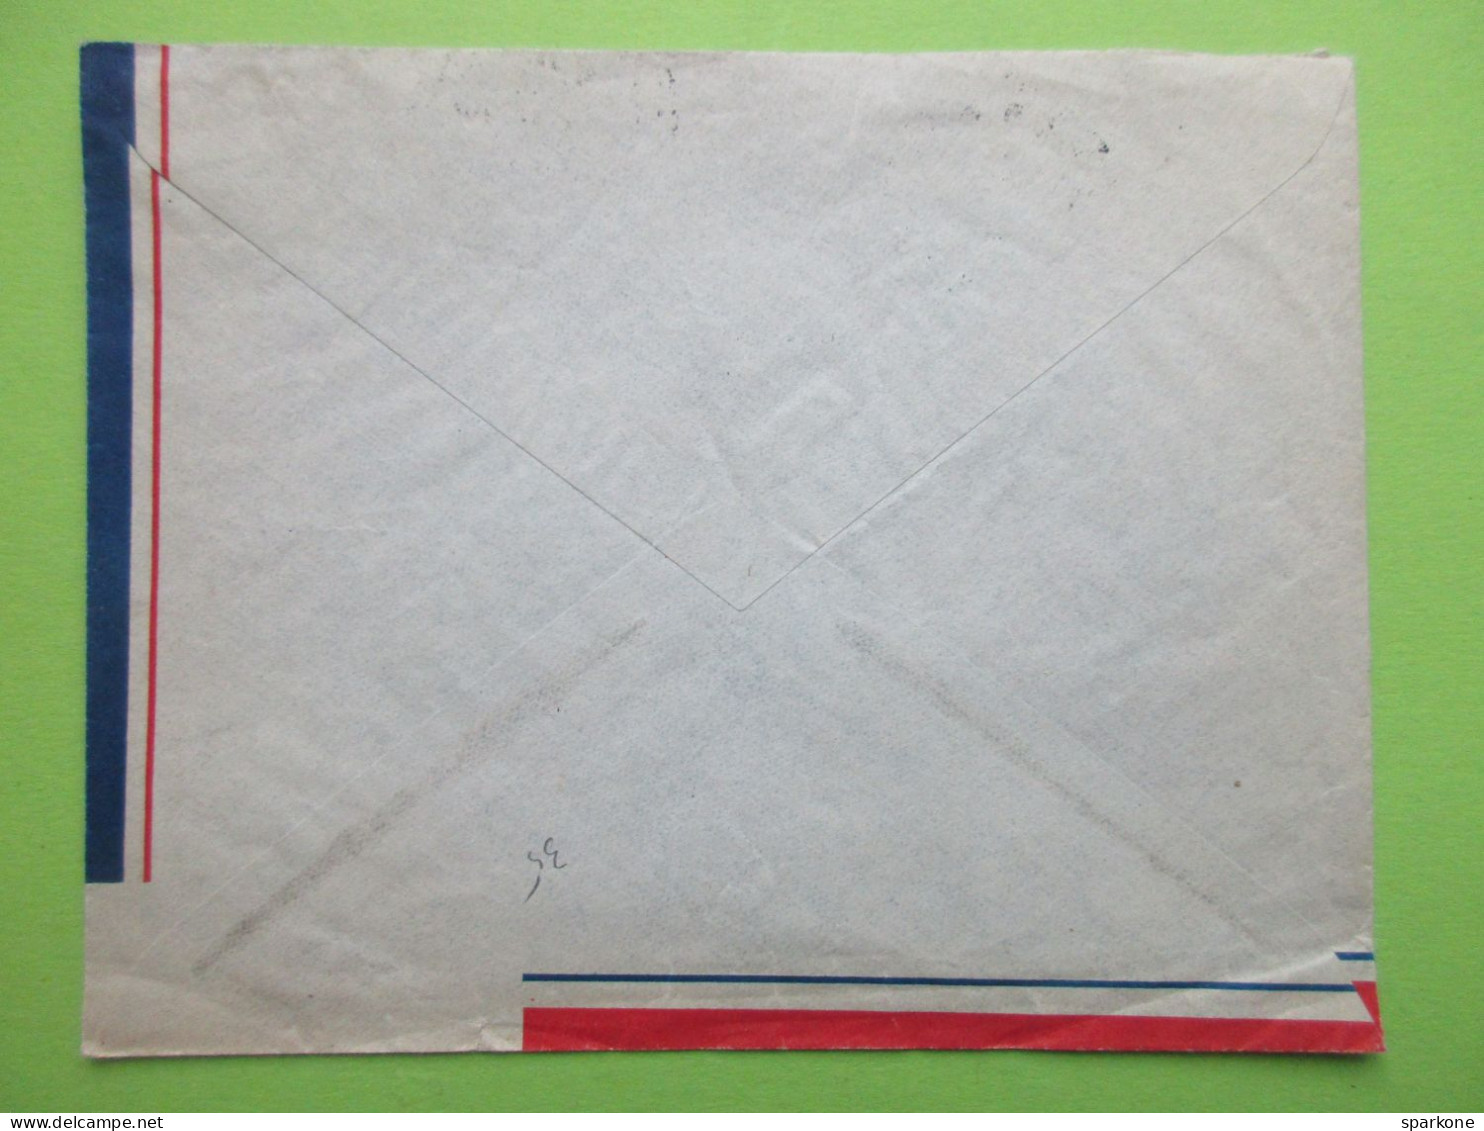 Marcophilie - Enveloppe - Poste Aérienne - Hang-Khong - Buu Chinh - Viêt-Nam